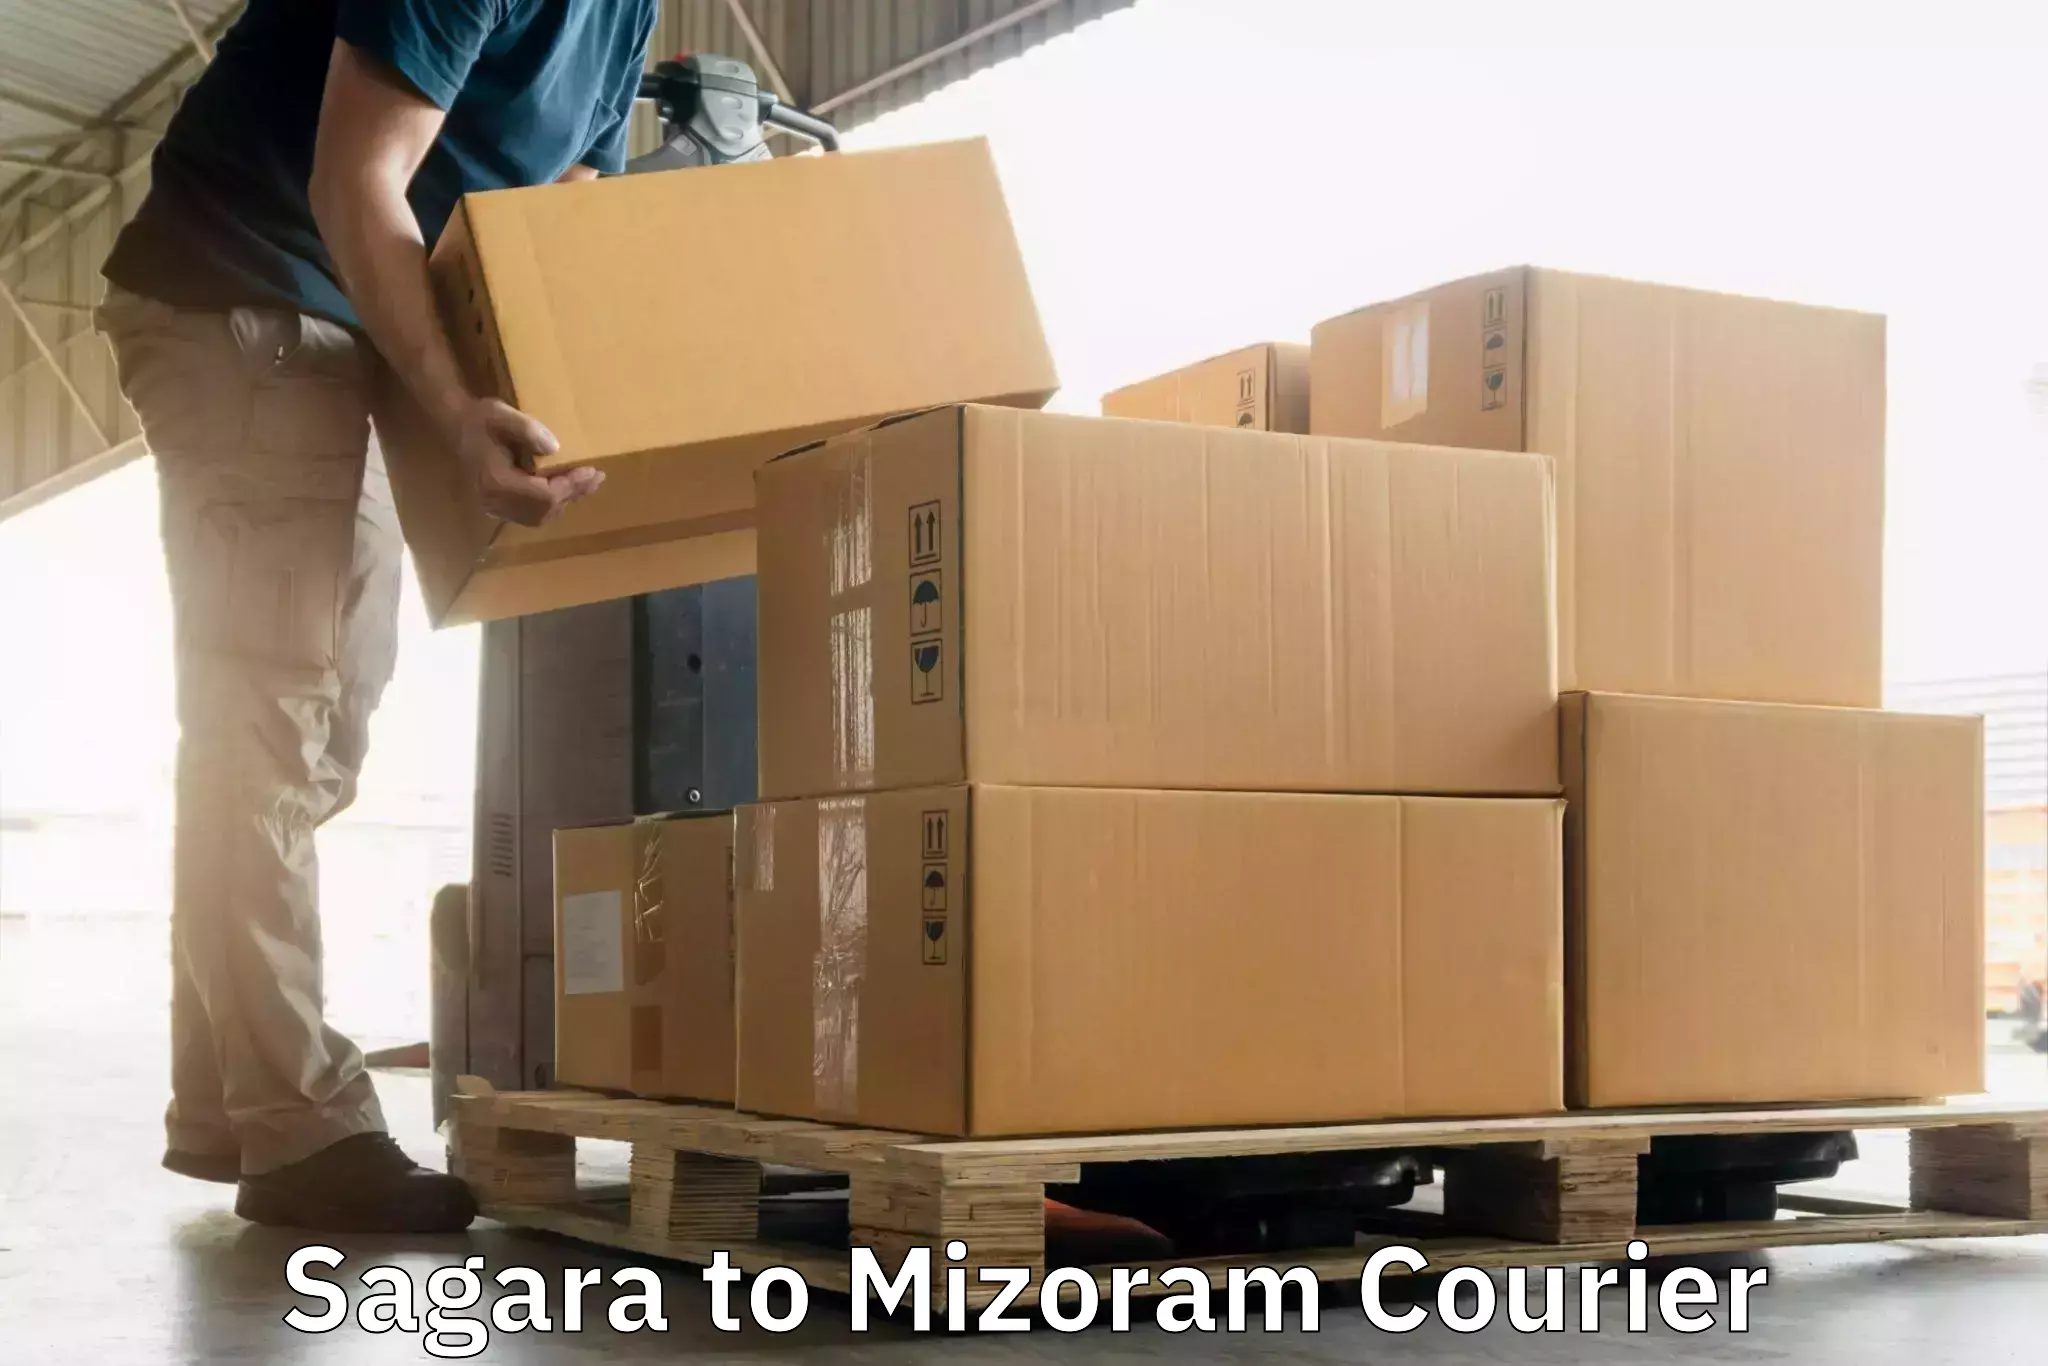 Doorstep delivery service Sagara to Mizoram